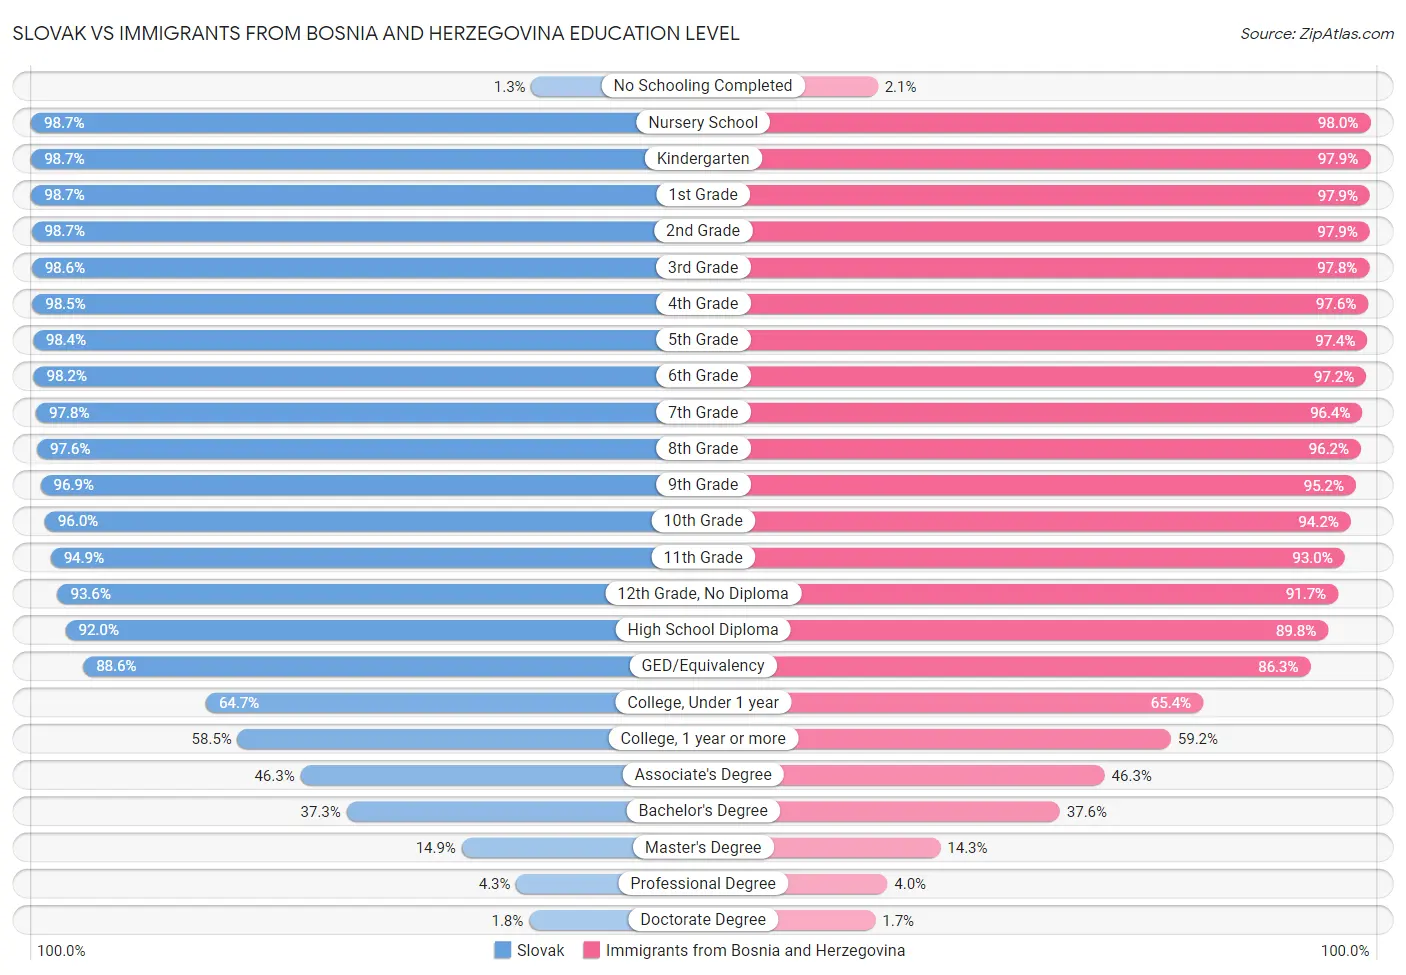 Slovak vs Immigrants from Bosnia and Herzegovina Education Level